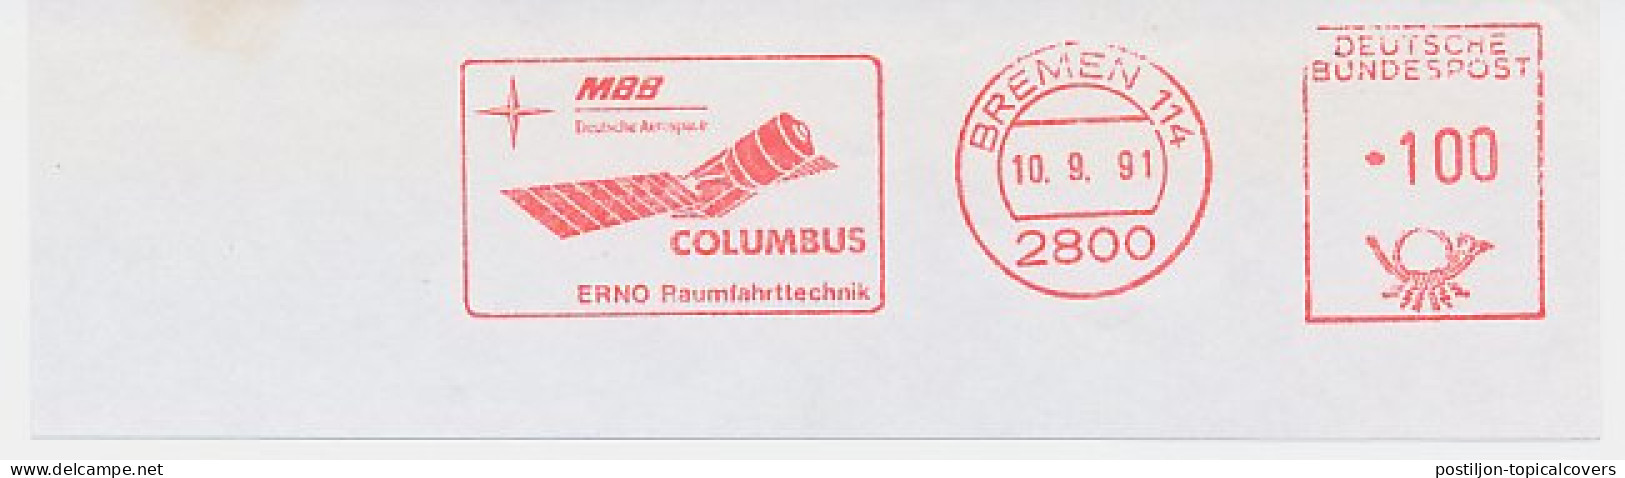 Meter Cut Germany 1991 Satellite Columbus - MBB - ERNO - Astronomie